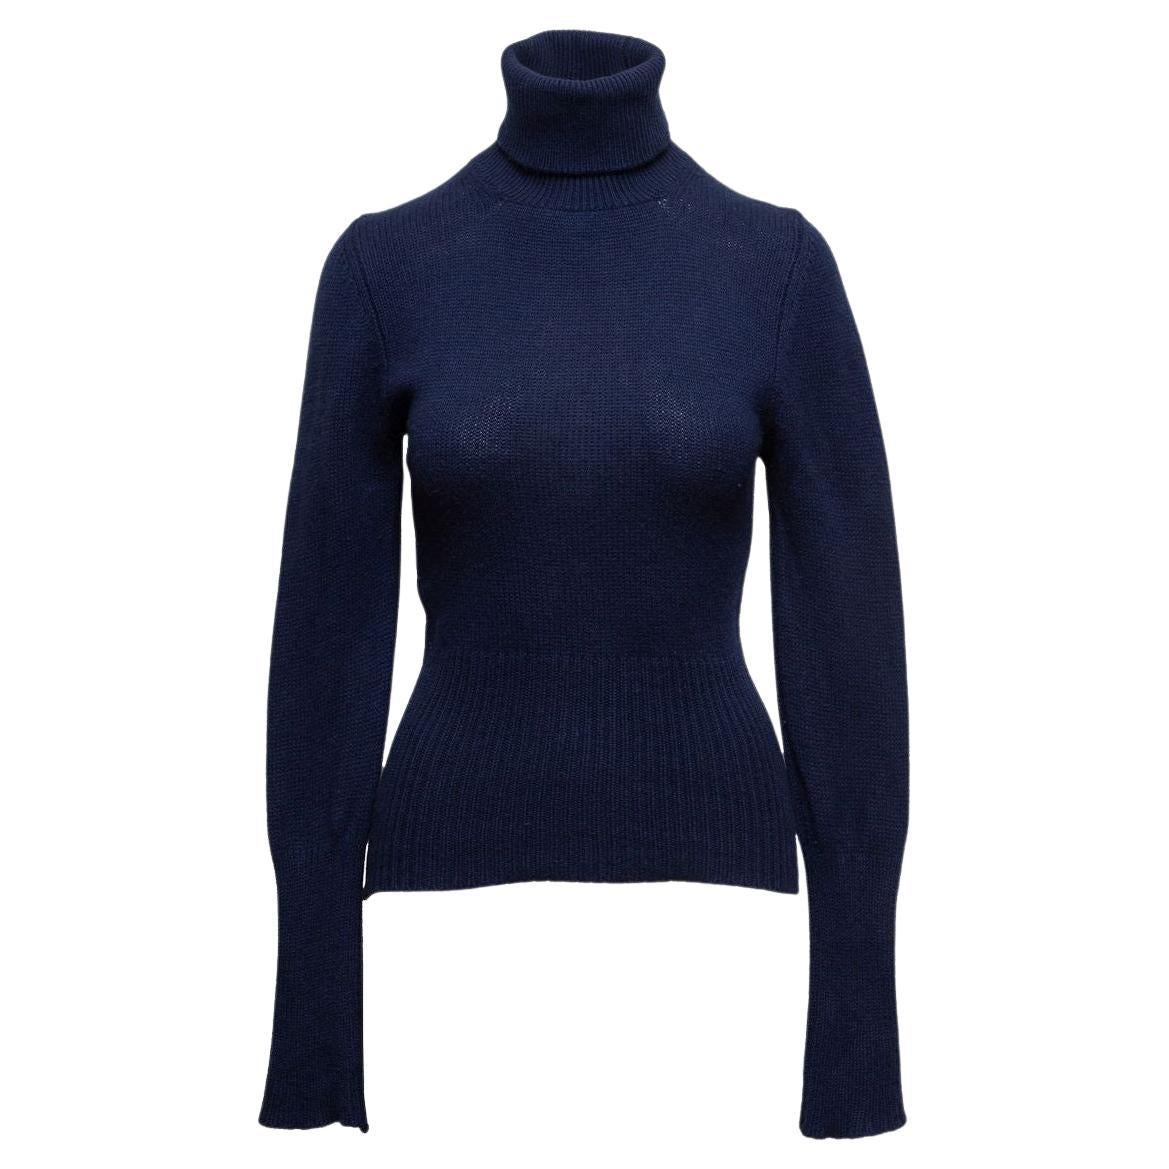 Yves Saint Laurent Navy Cashmere Turtleneck Sweater